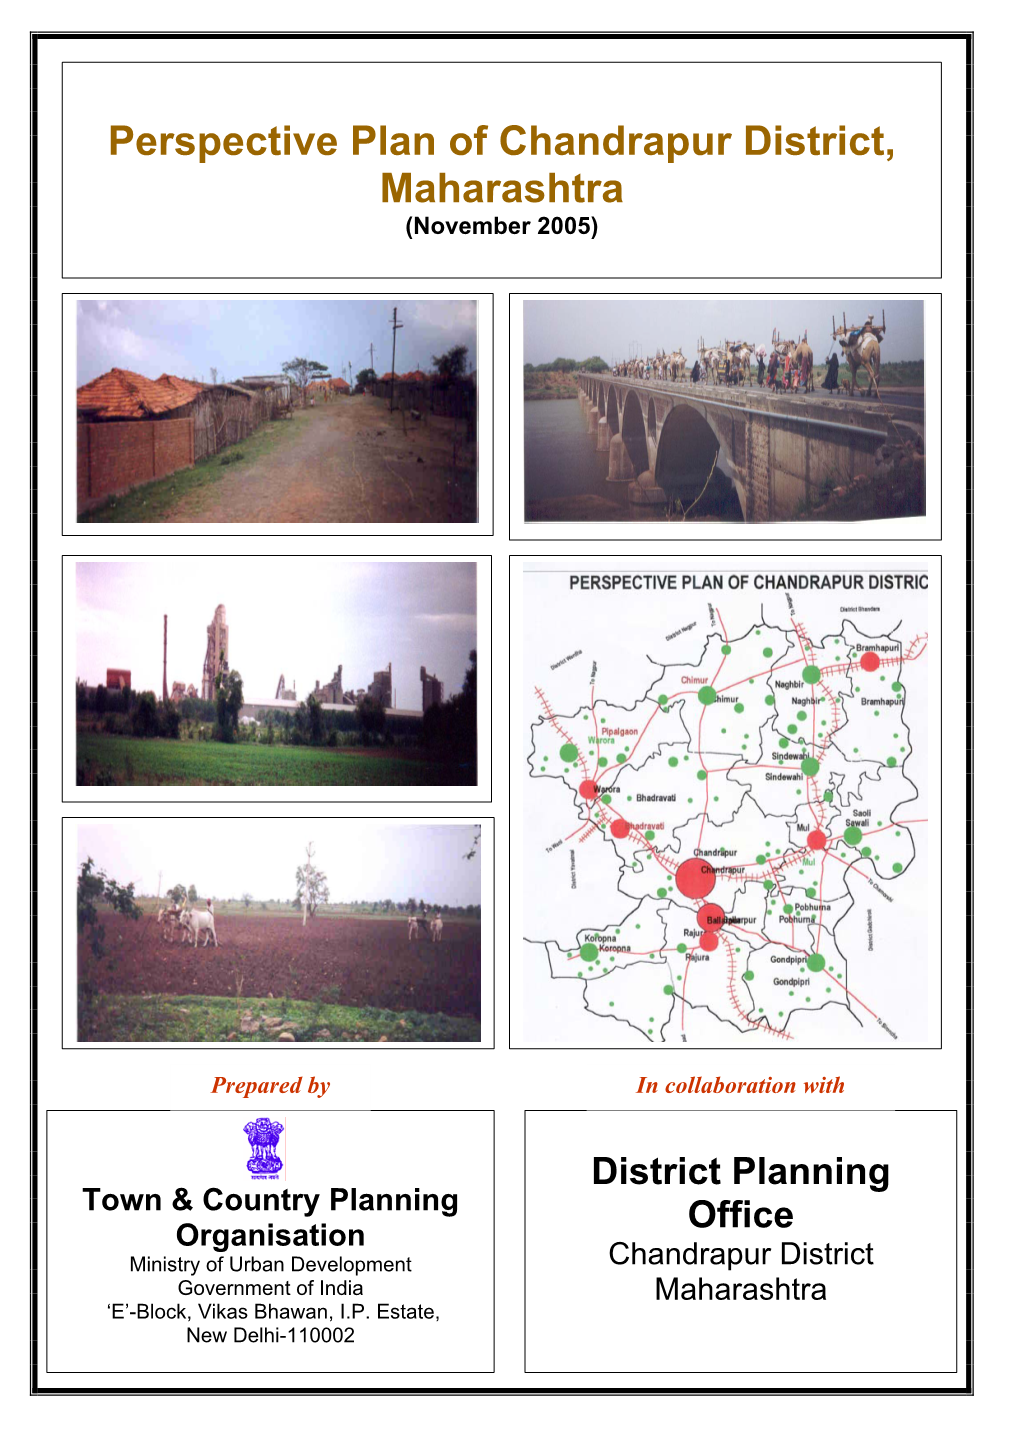 Perspective Plan of Chandrapur District, Maharashtra TCPO